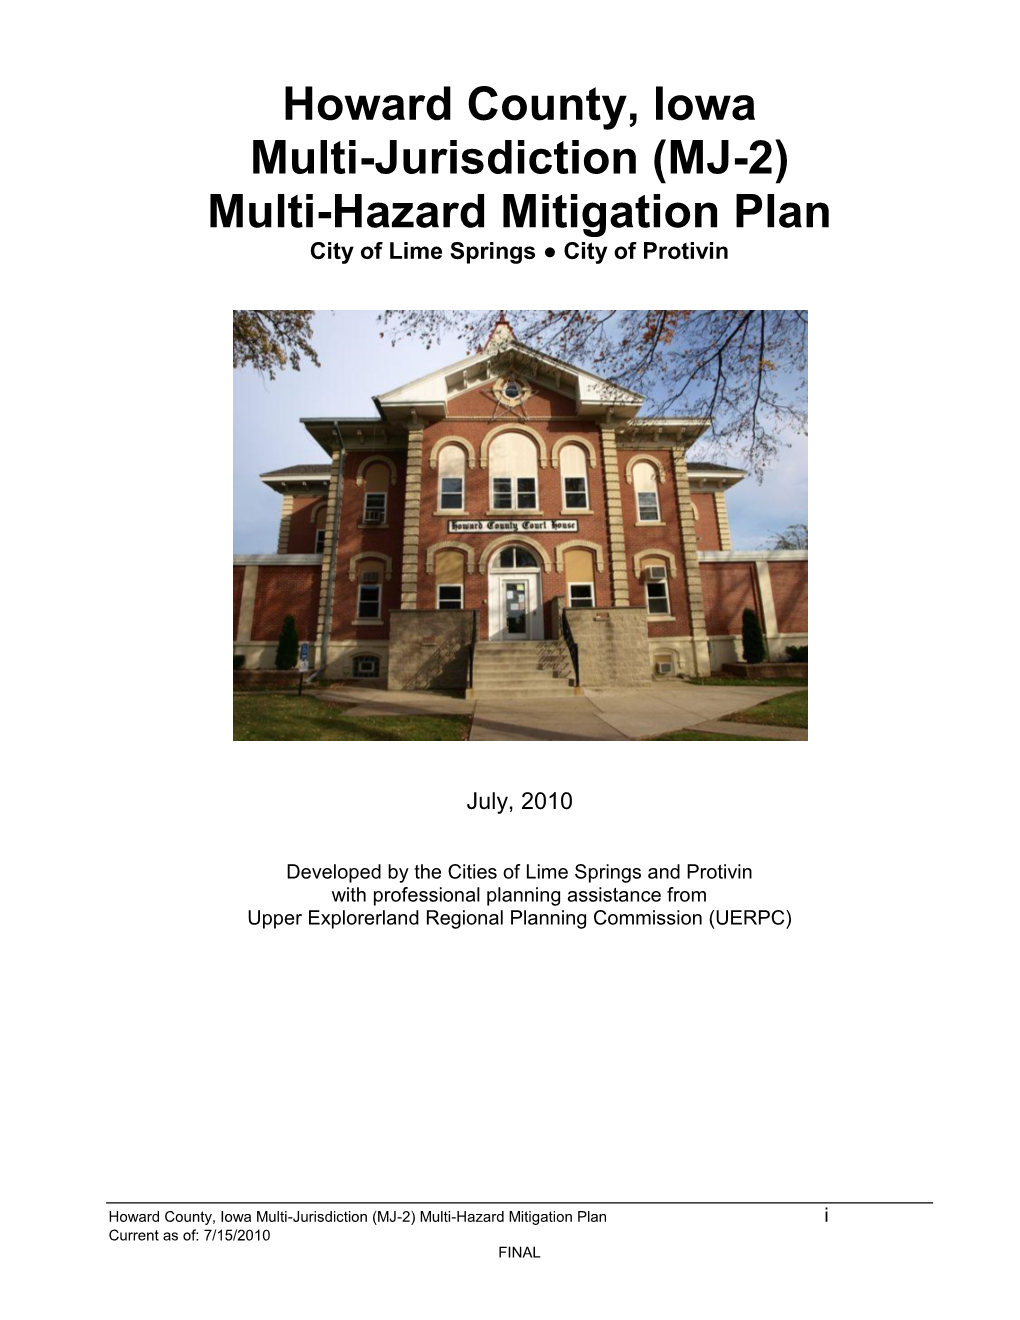 Howard County Hazard Mitigation Plan